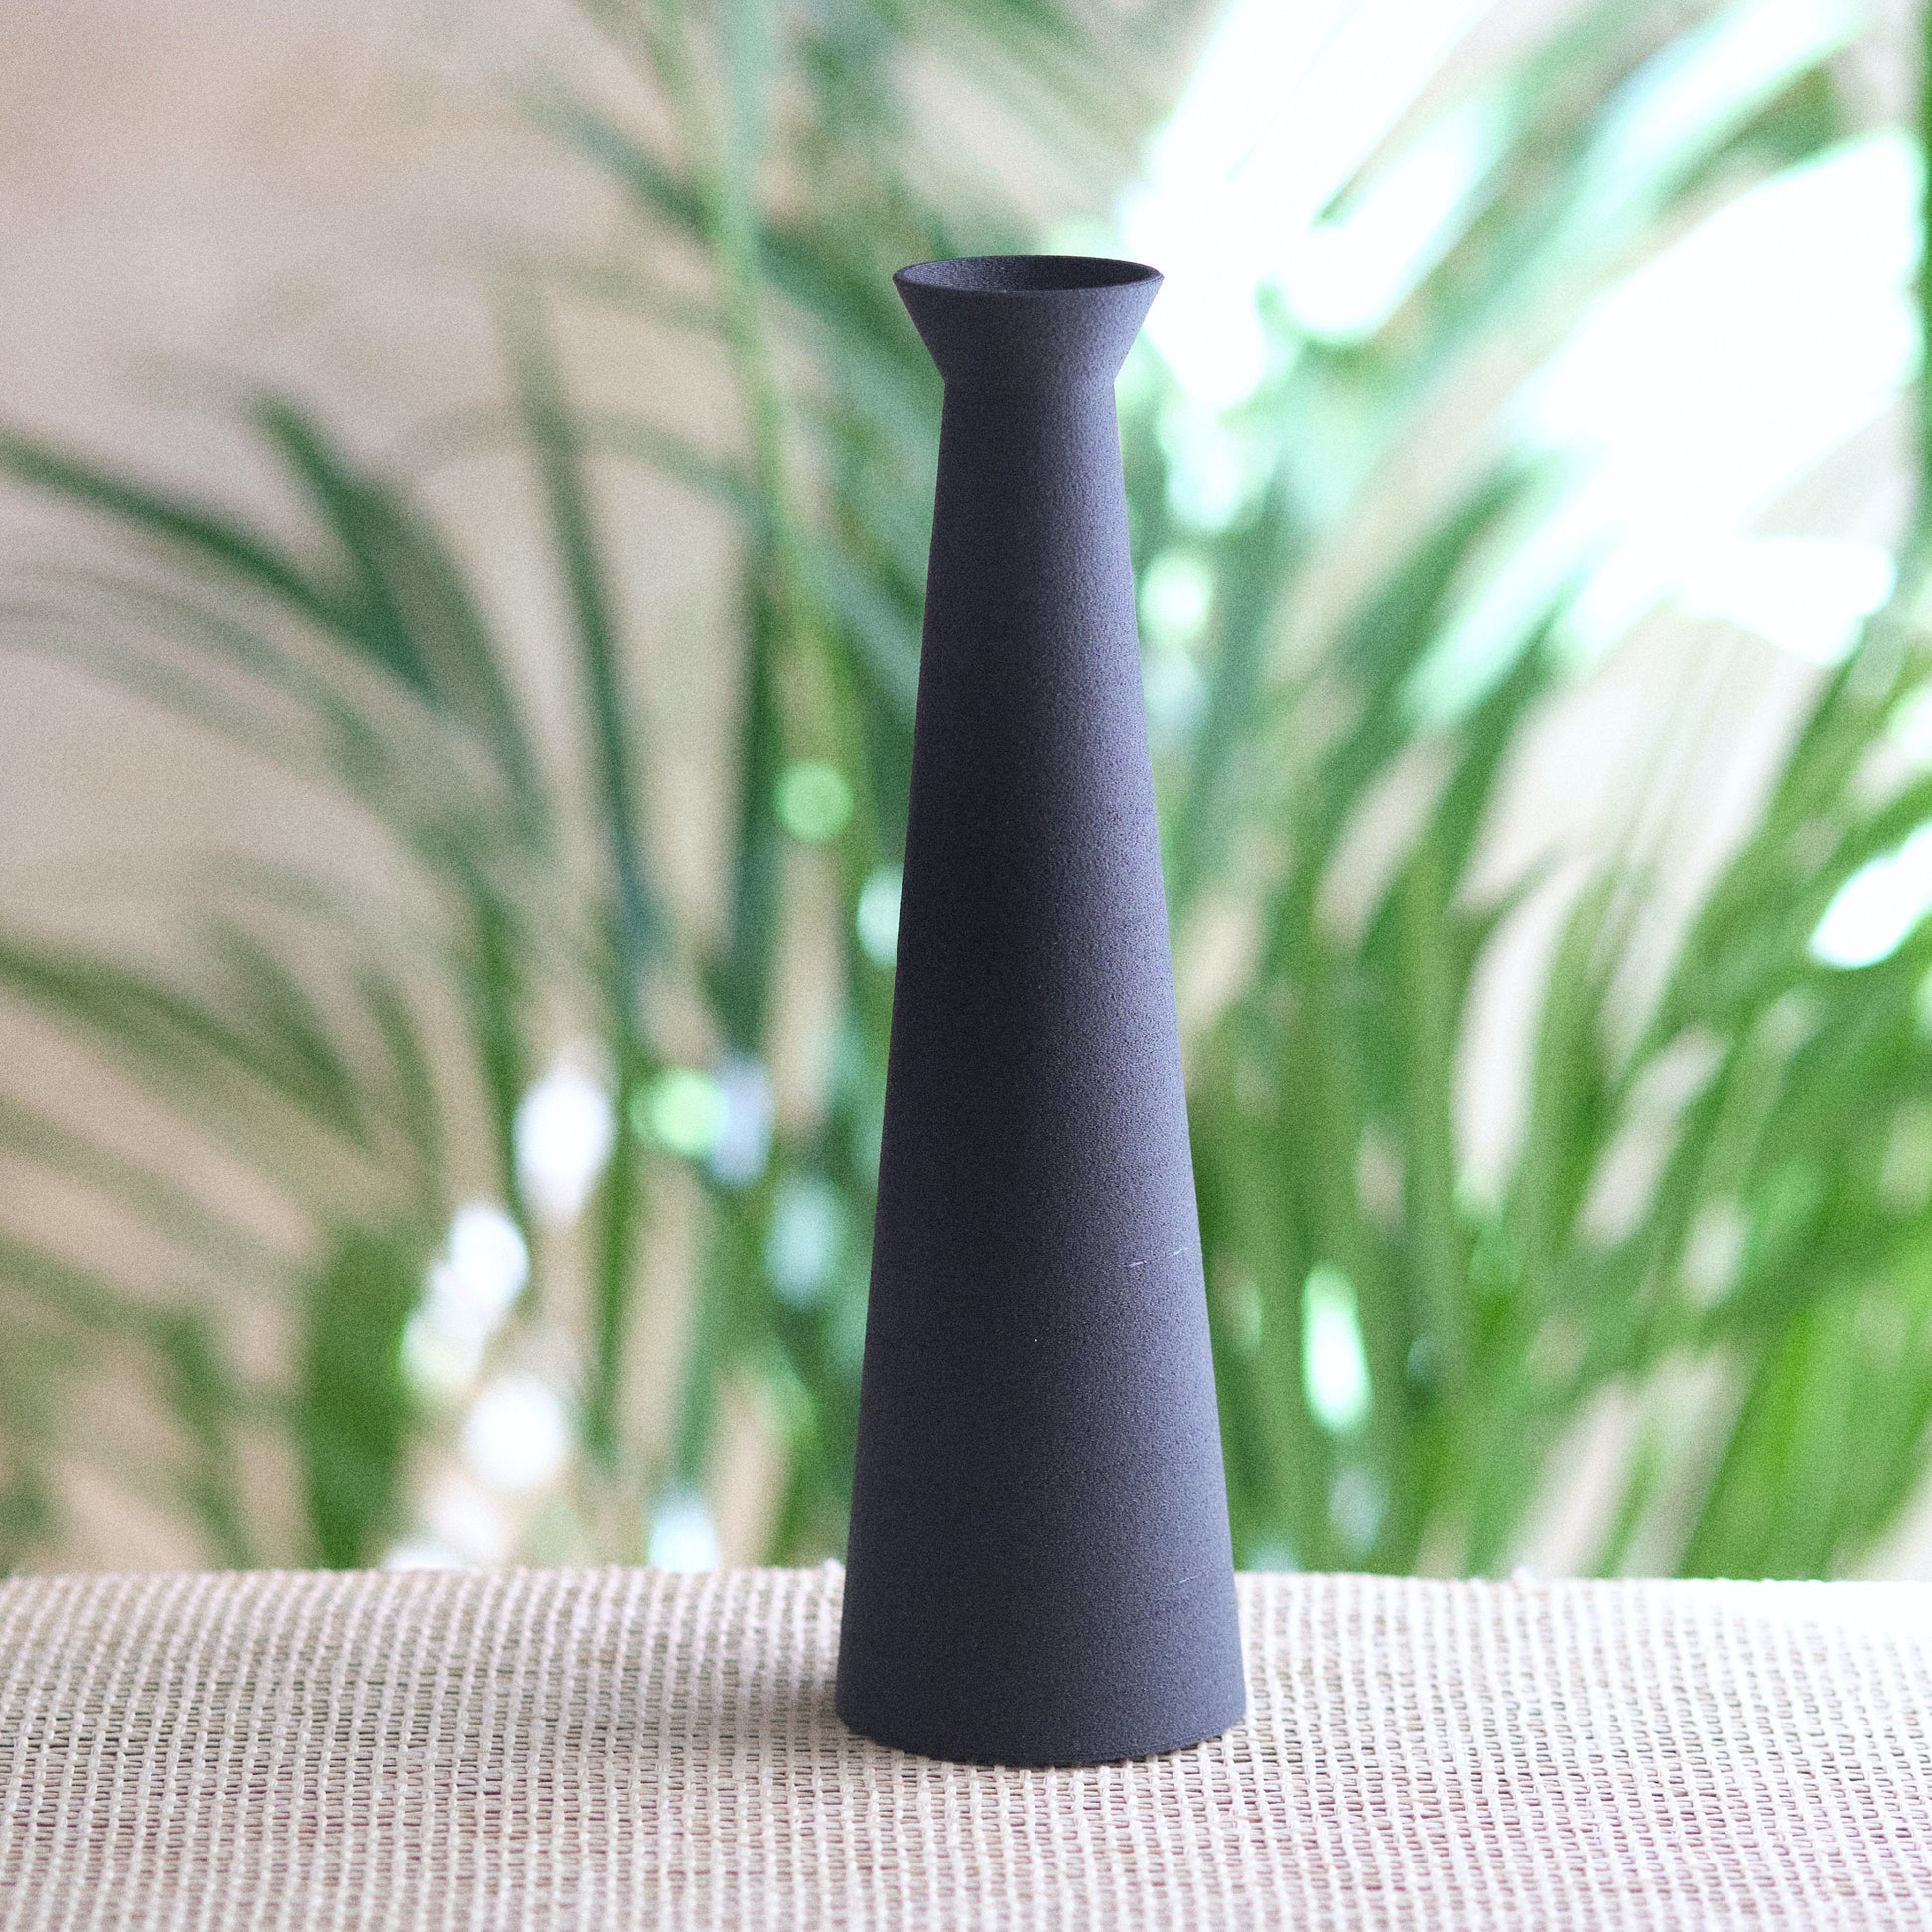 Vase ébène à l'élégance minimaliste | Ebony vase with minimalist elegance